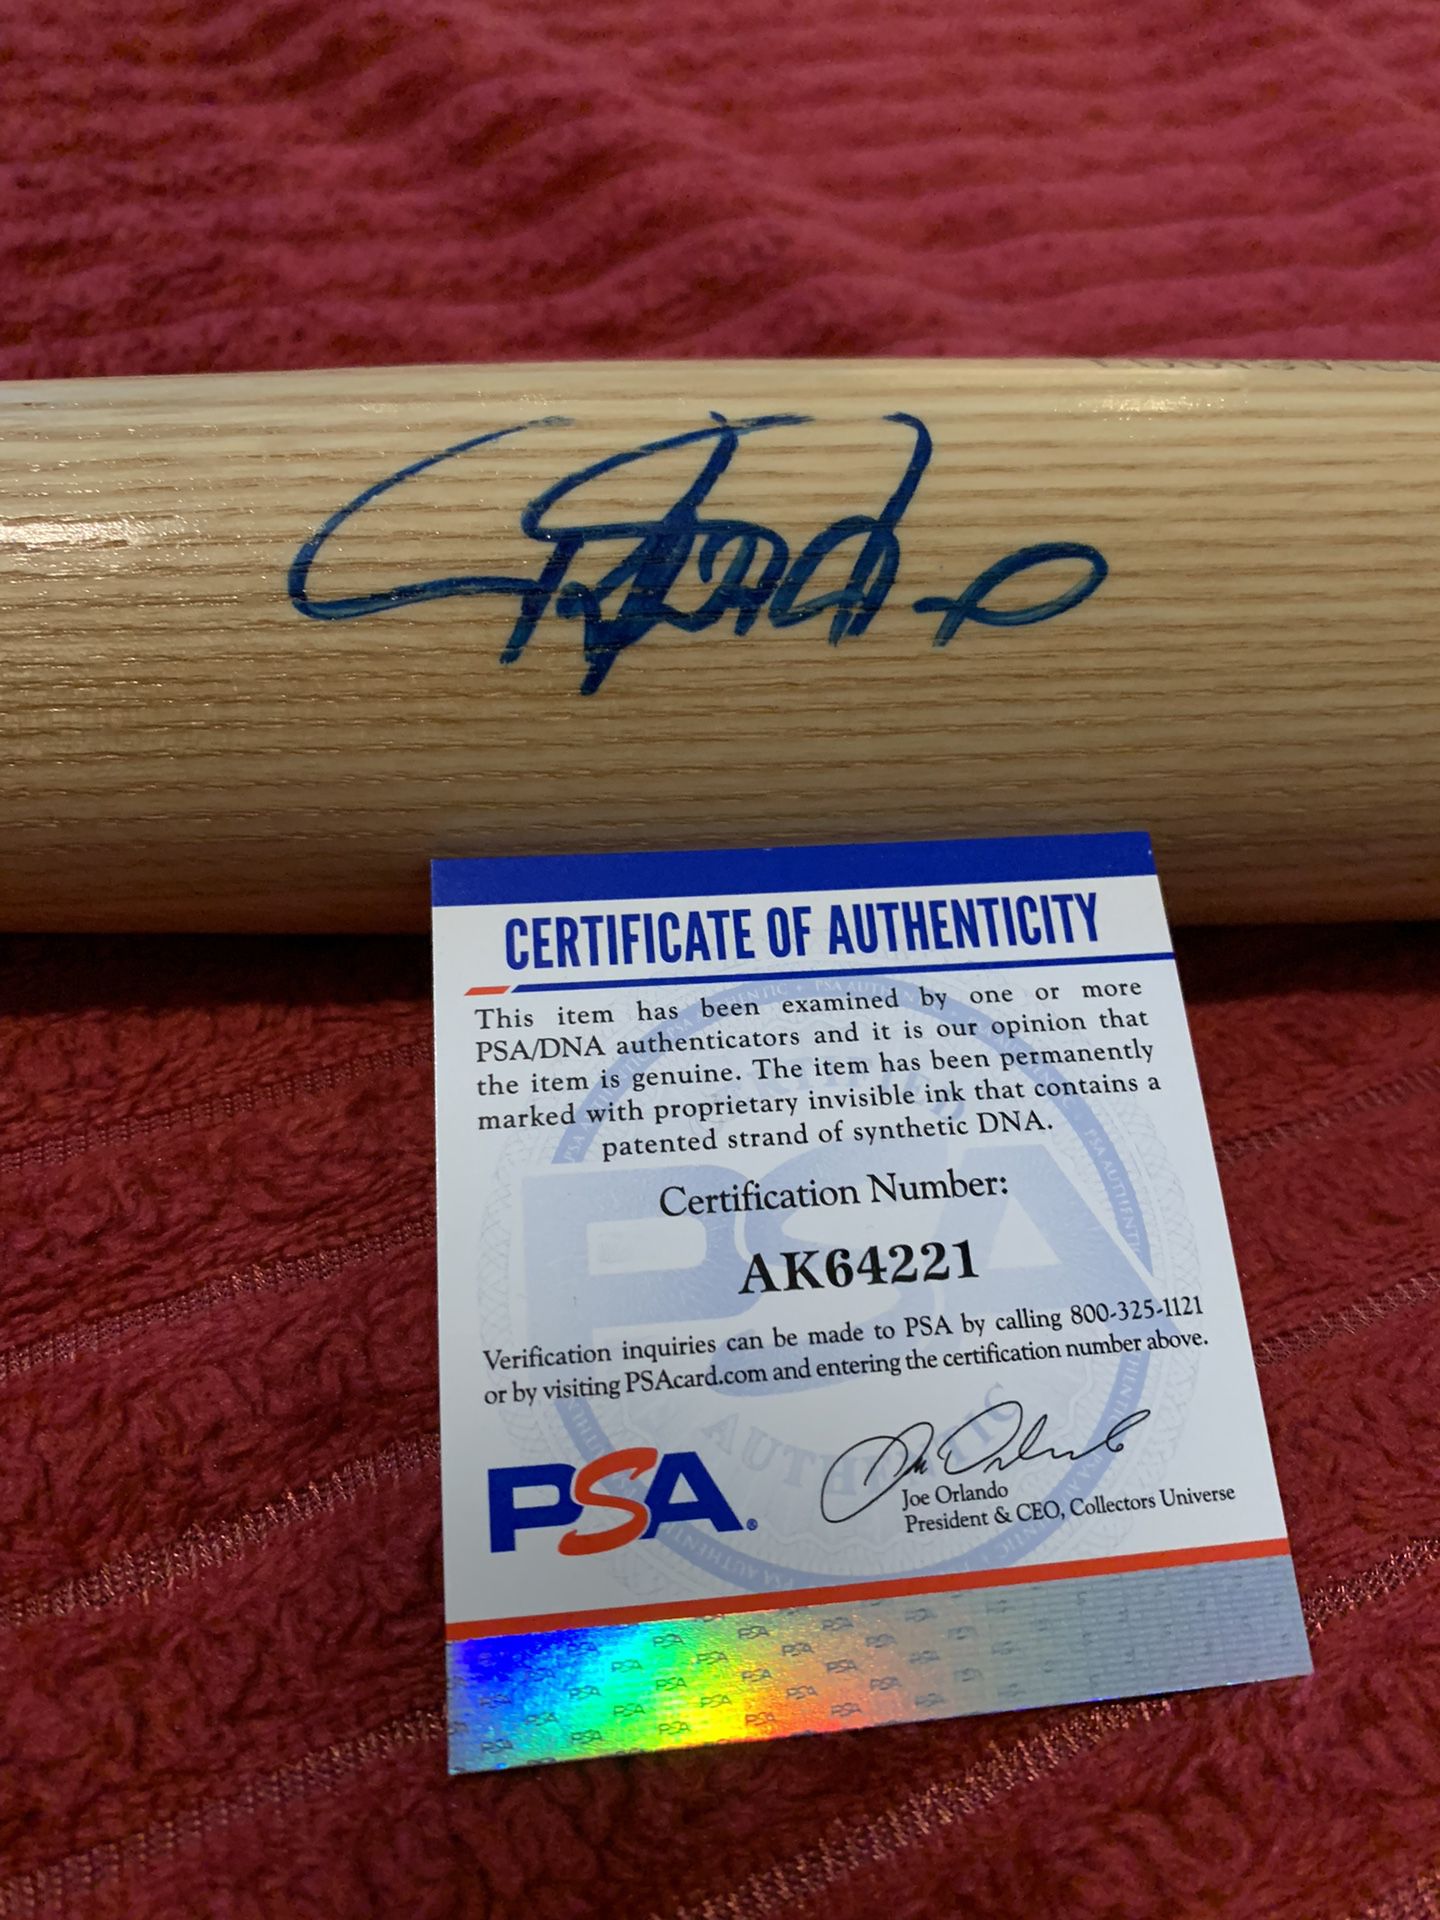 Rafael Palmeiro Signed Autograph Baseball Bat With PSA COA